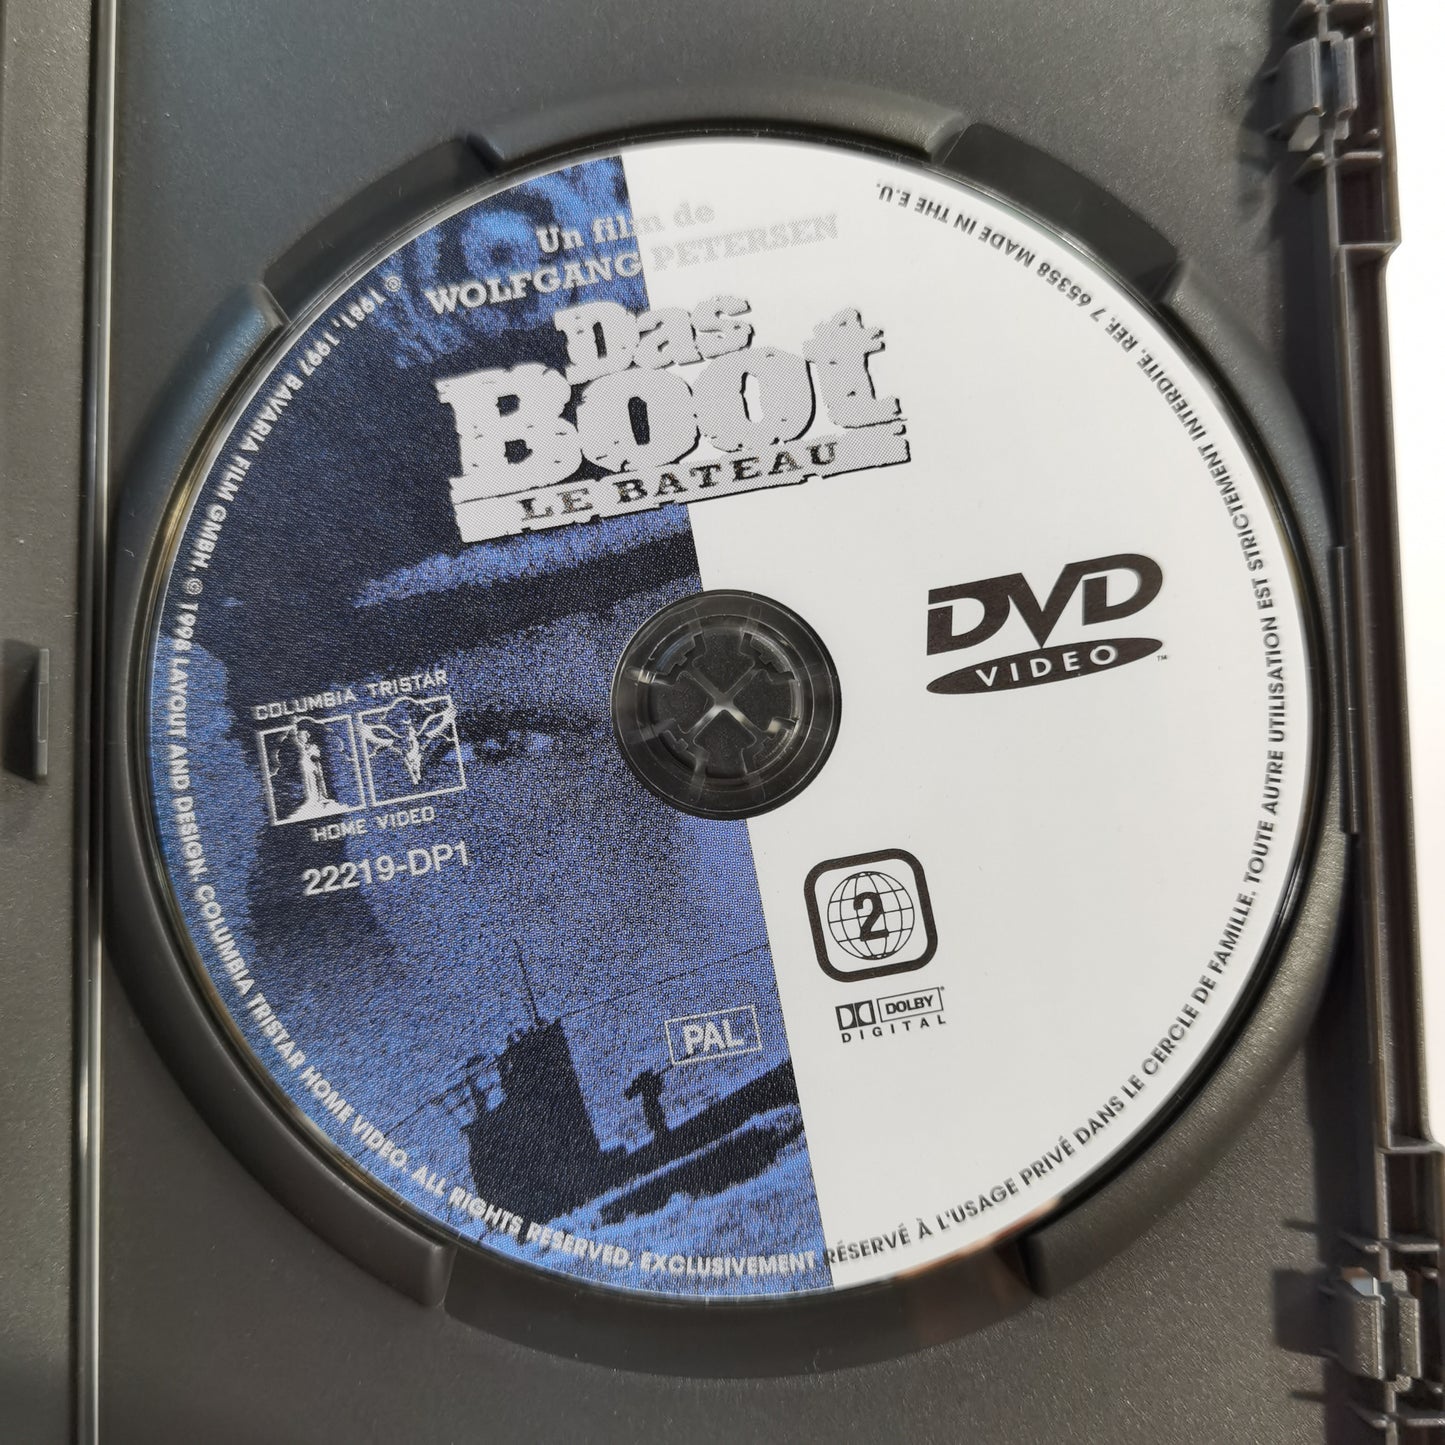 Das Boot (1981) - DVD SE 2006 The Director's Cut